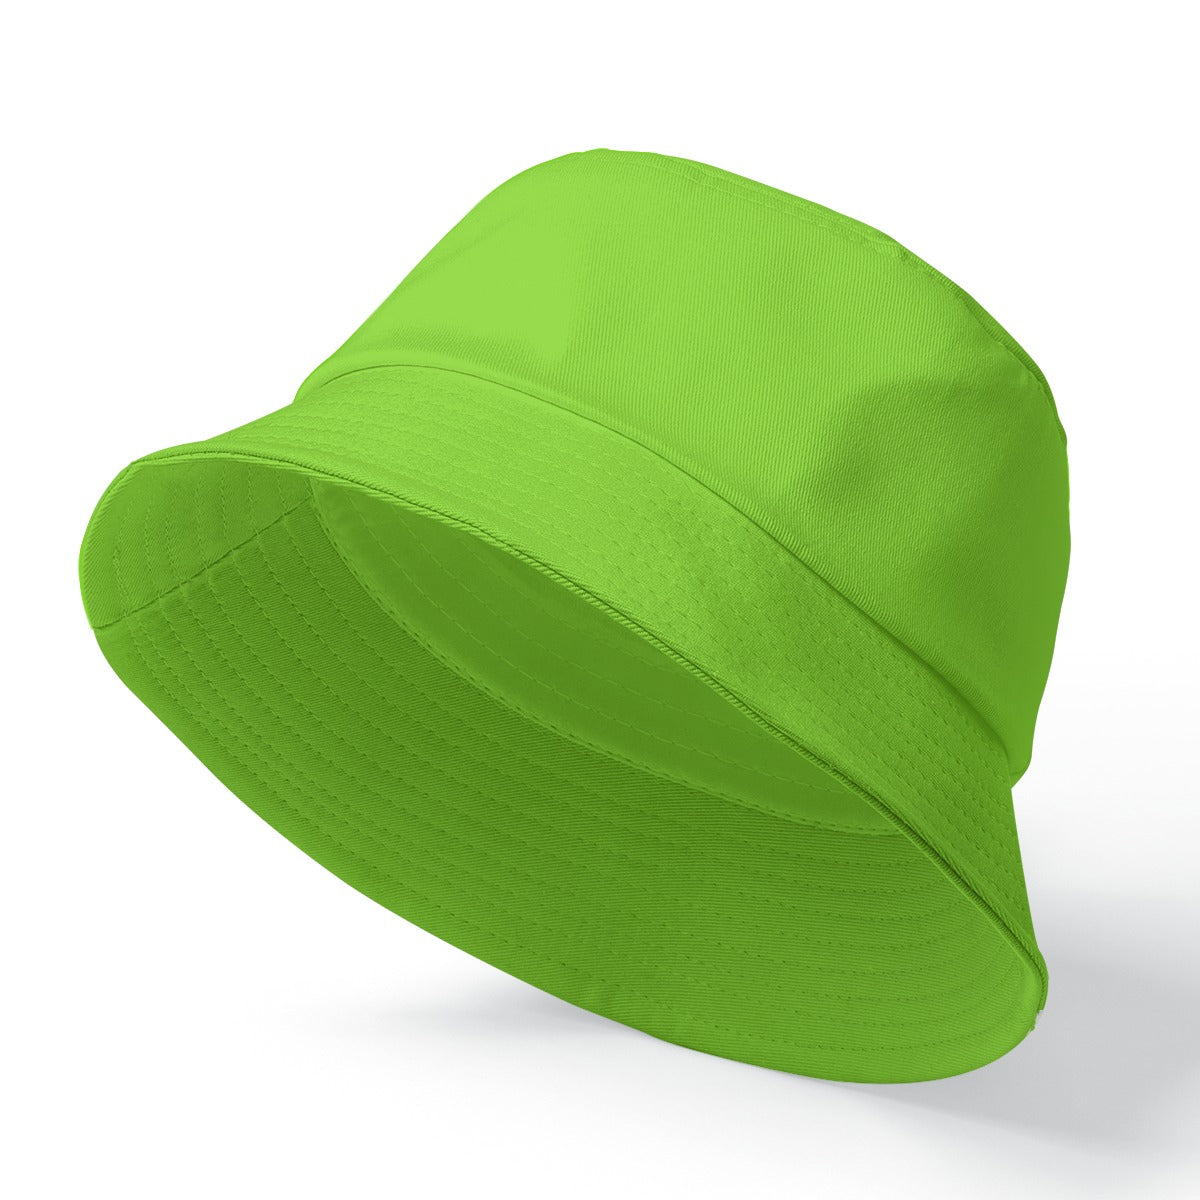 Sixty Eight 93 Logo White Green Apple Bucket Hat